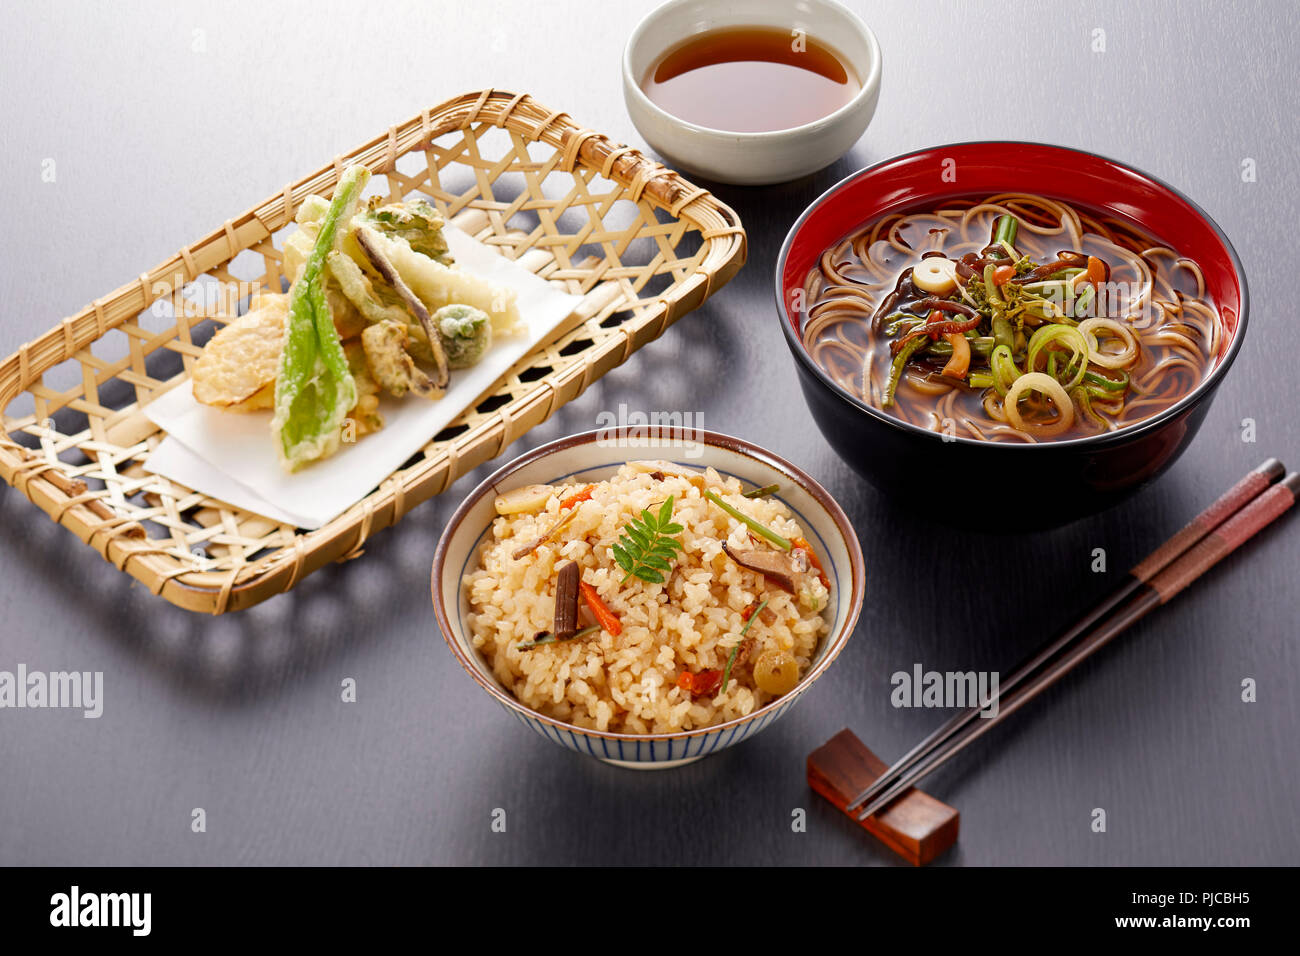 Japanese style meal menu Stock Photo